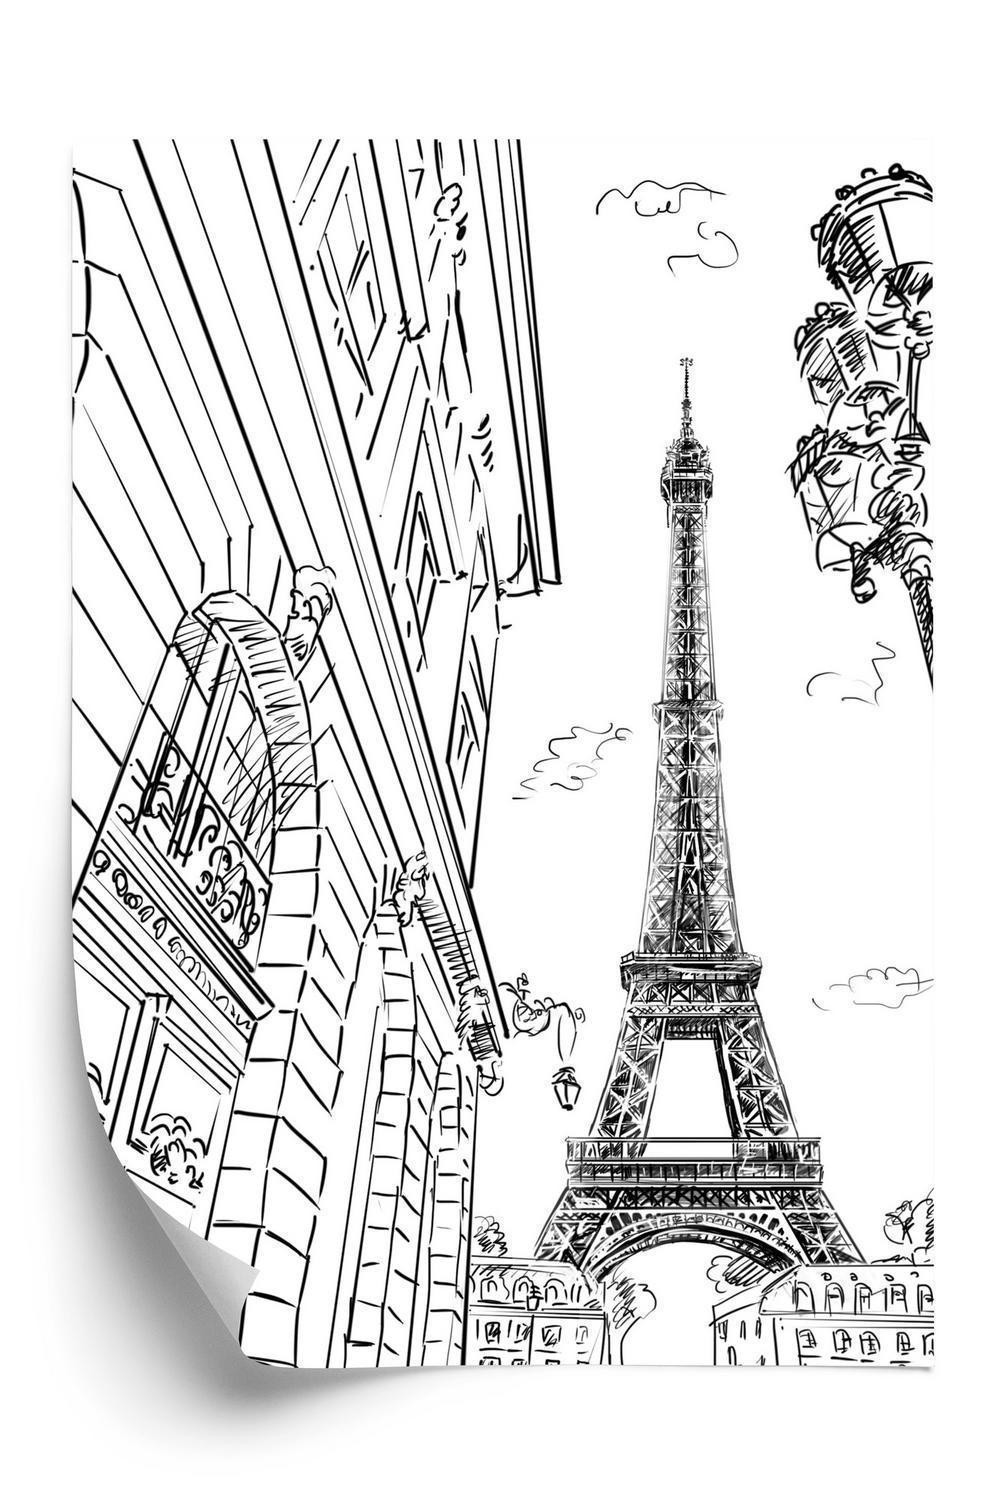 Plakat gaderne i paris - Skitse